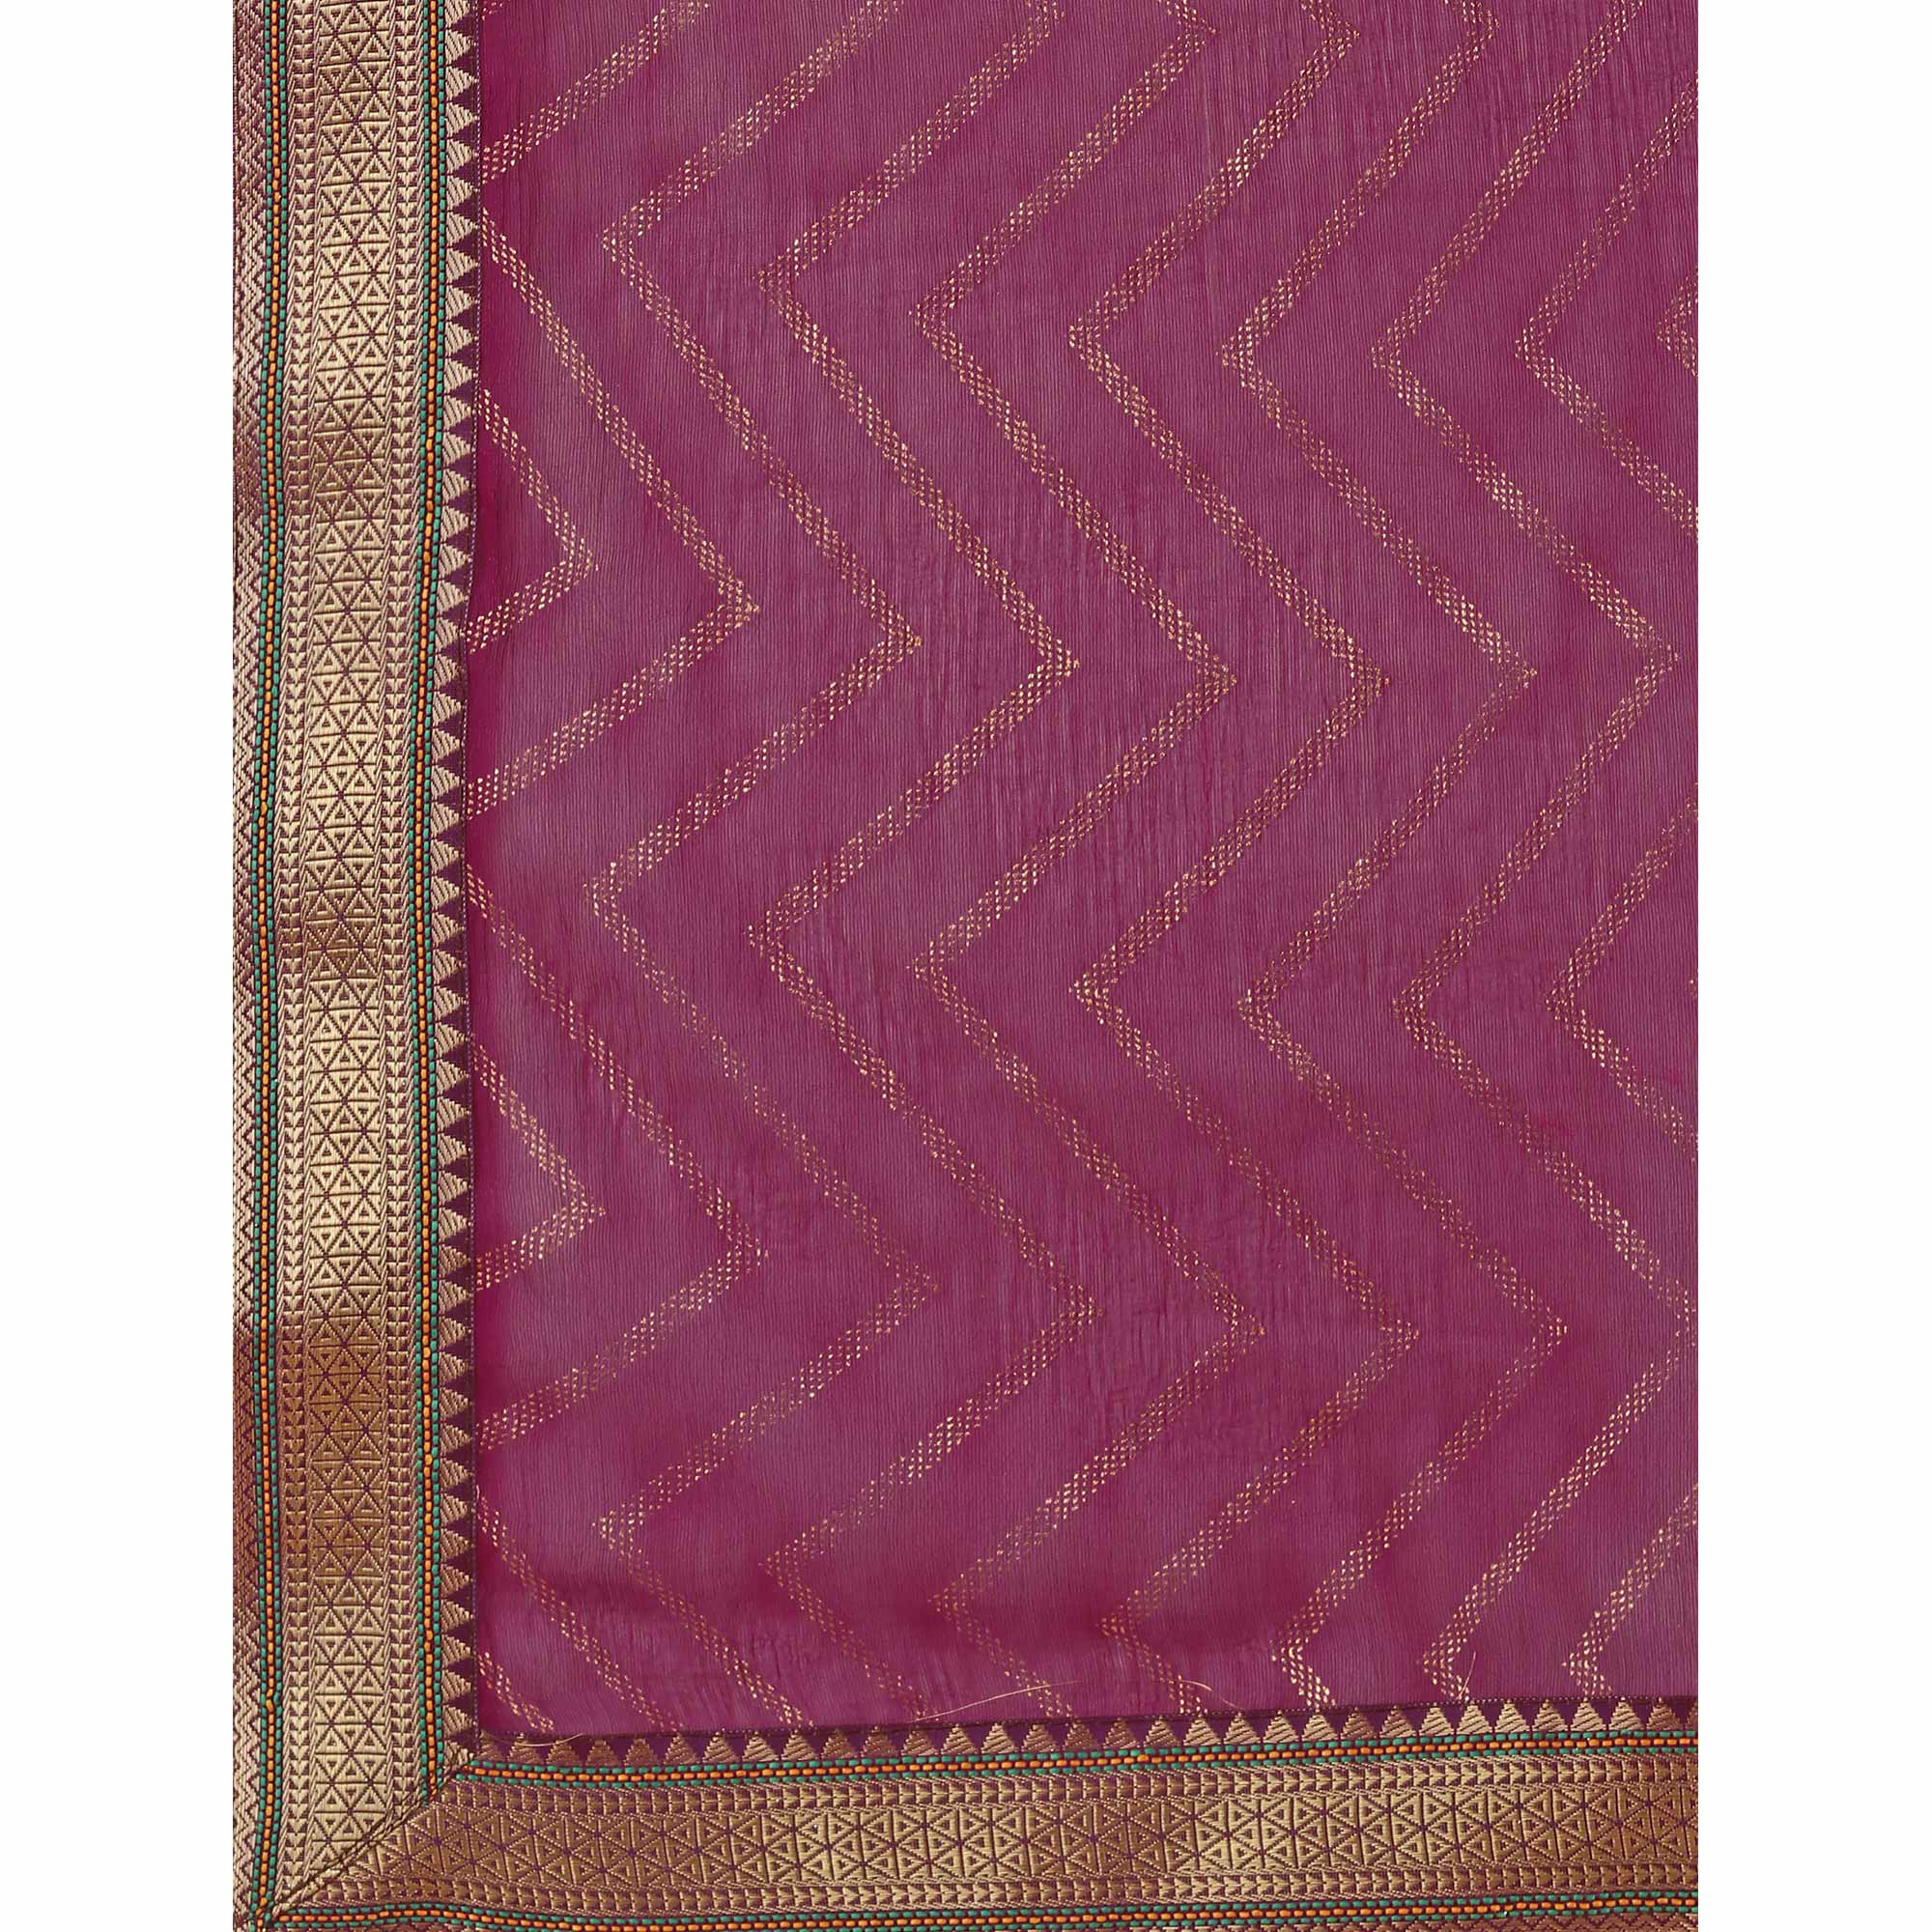 Wine Foil Printed Chiffon Saree With Lace Border